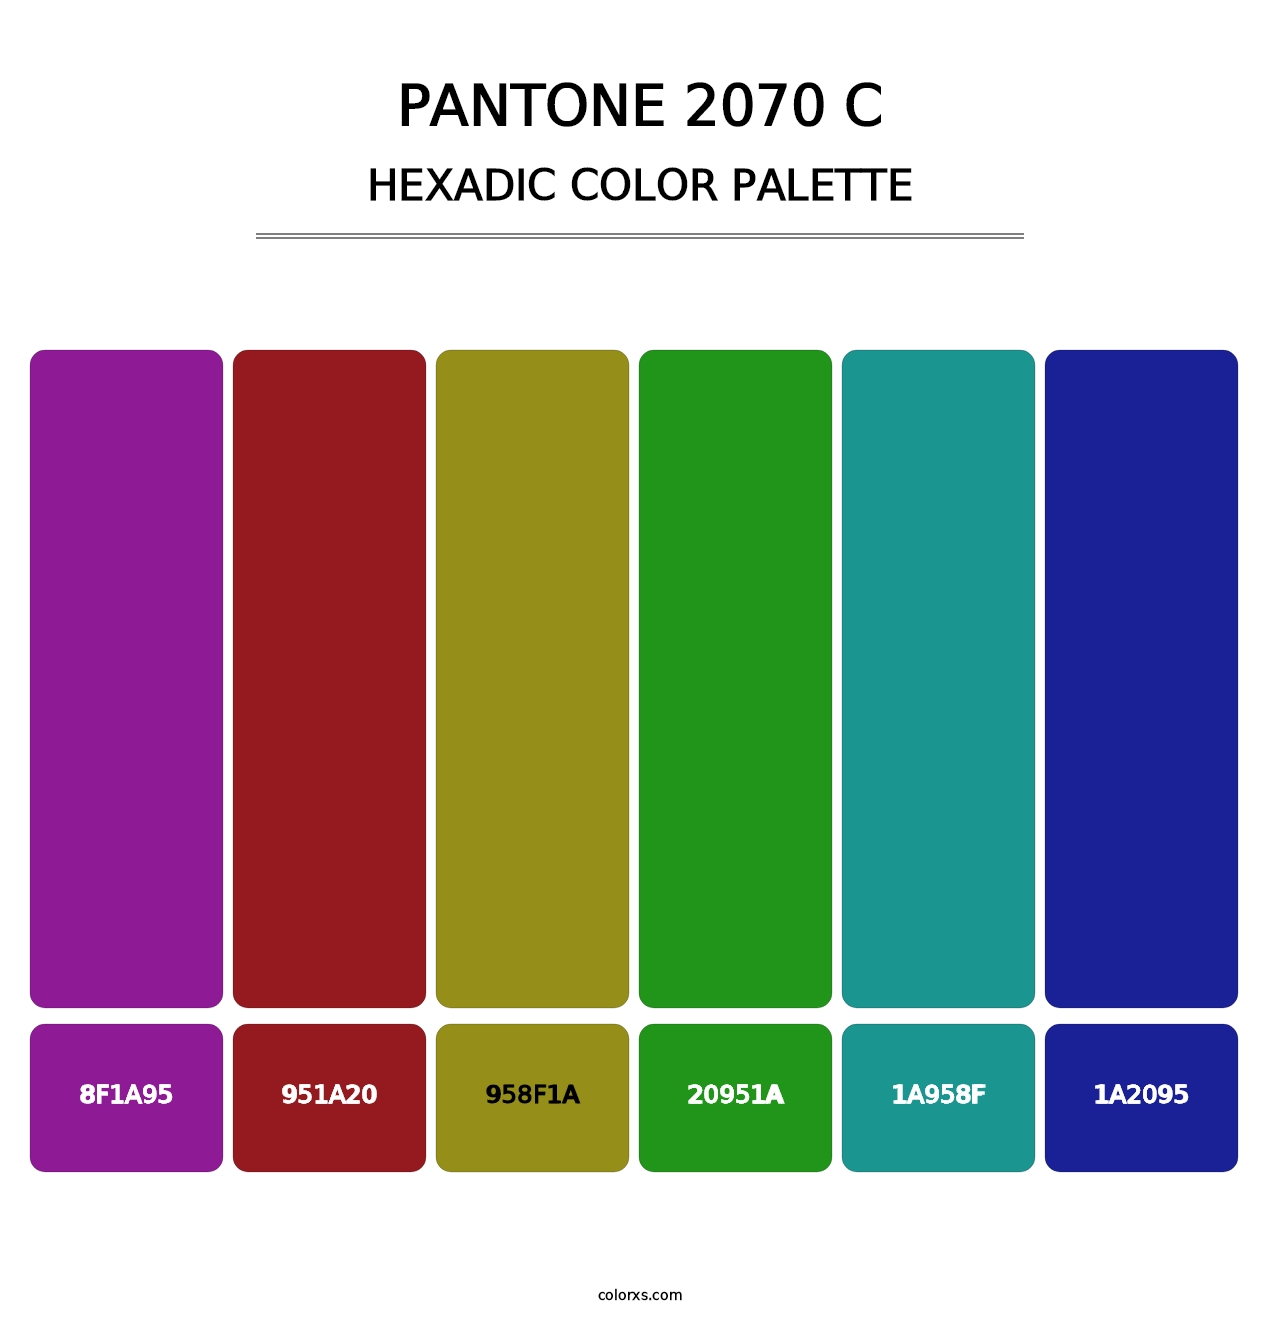 PANTONE 2070 C - Hexadic Color Palette